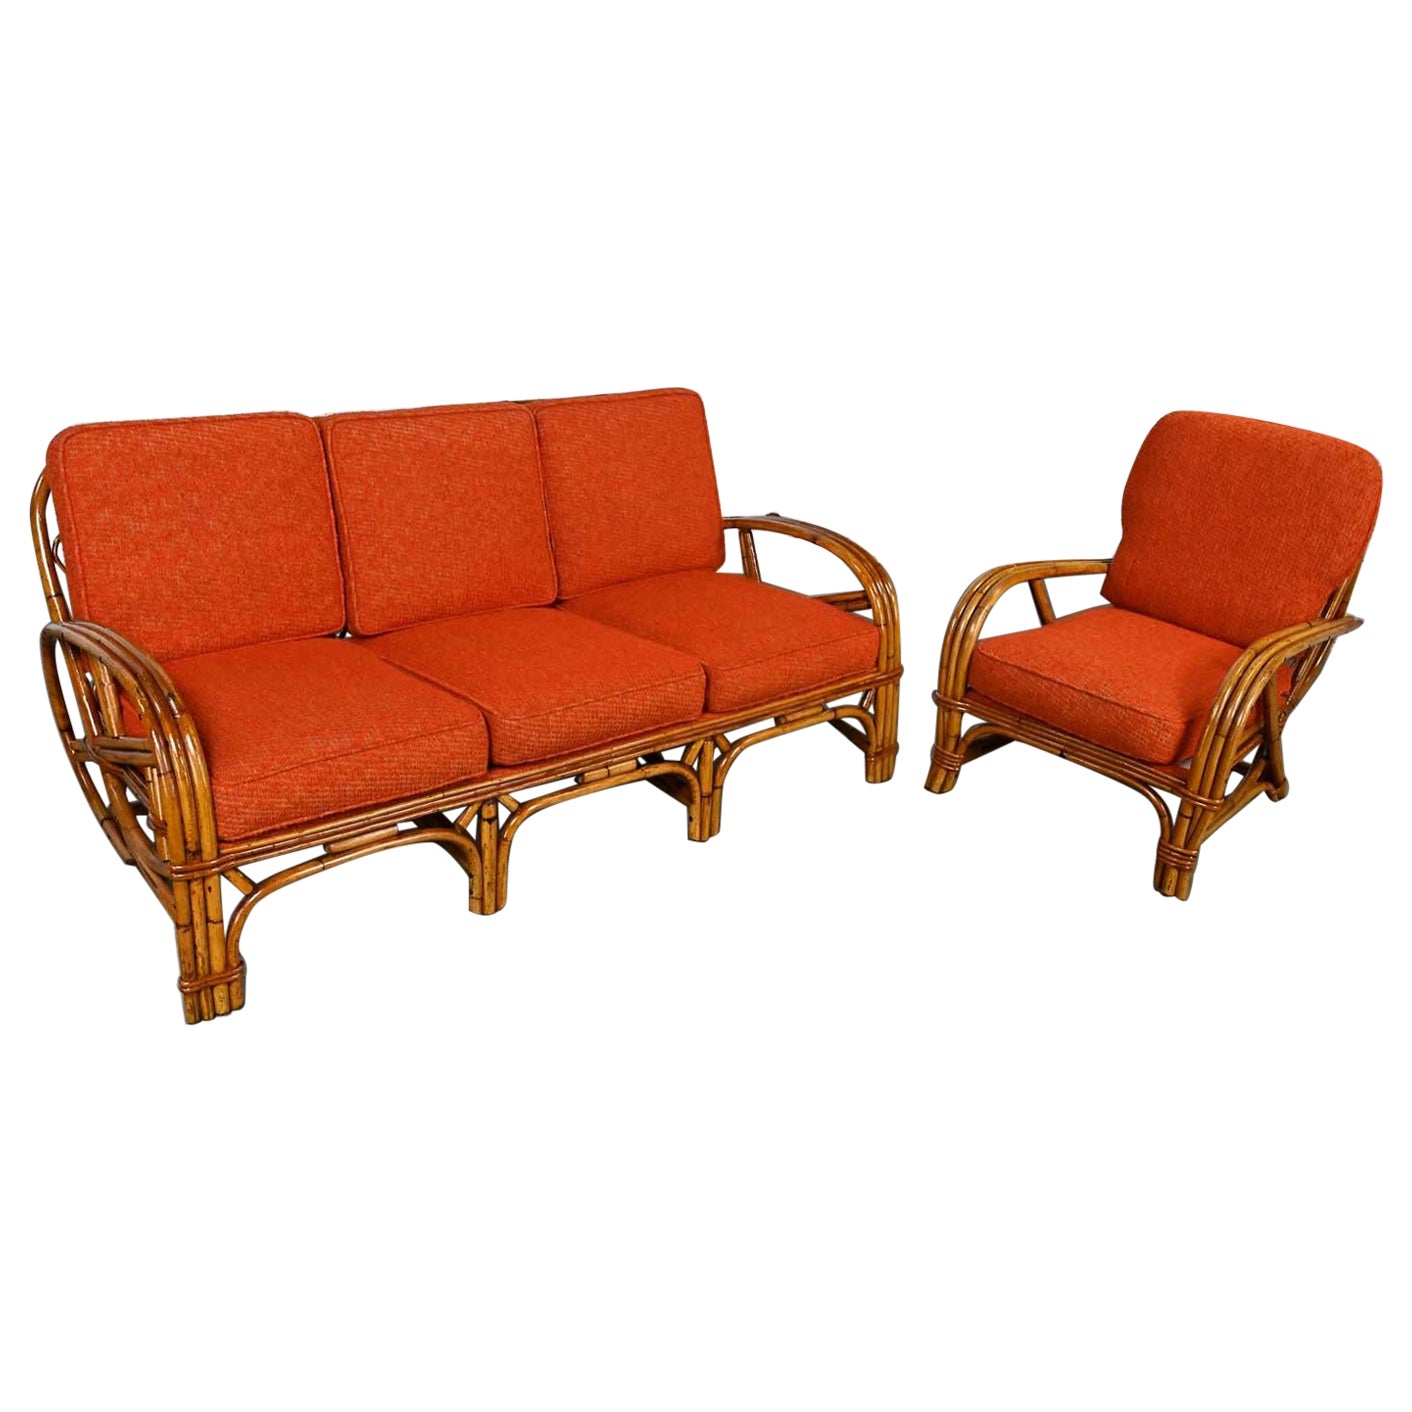 Triple Strand Rattan Sofa & Chair Orange Fabric Cushions Style Heywood Wakefield For Sale